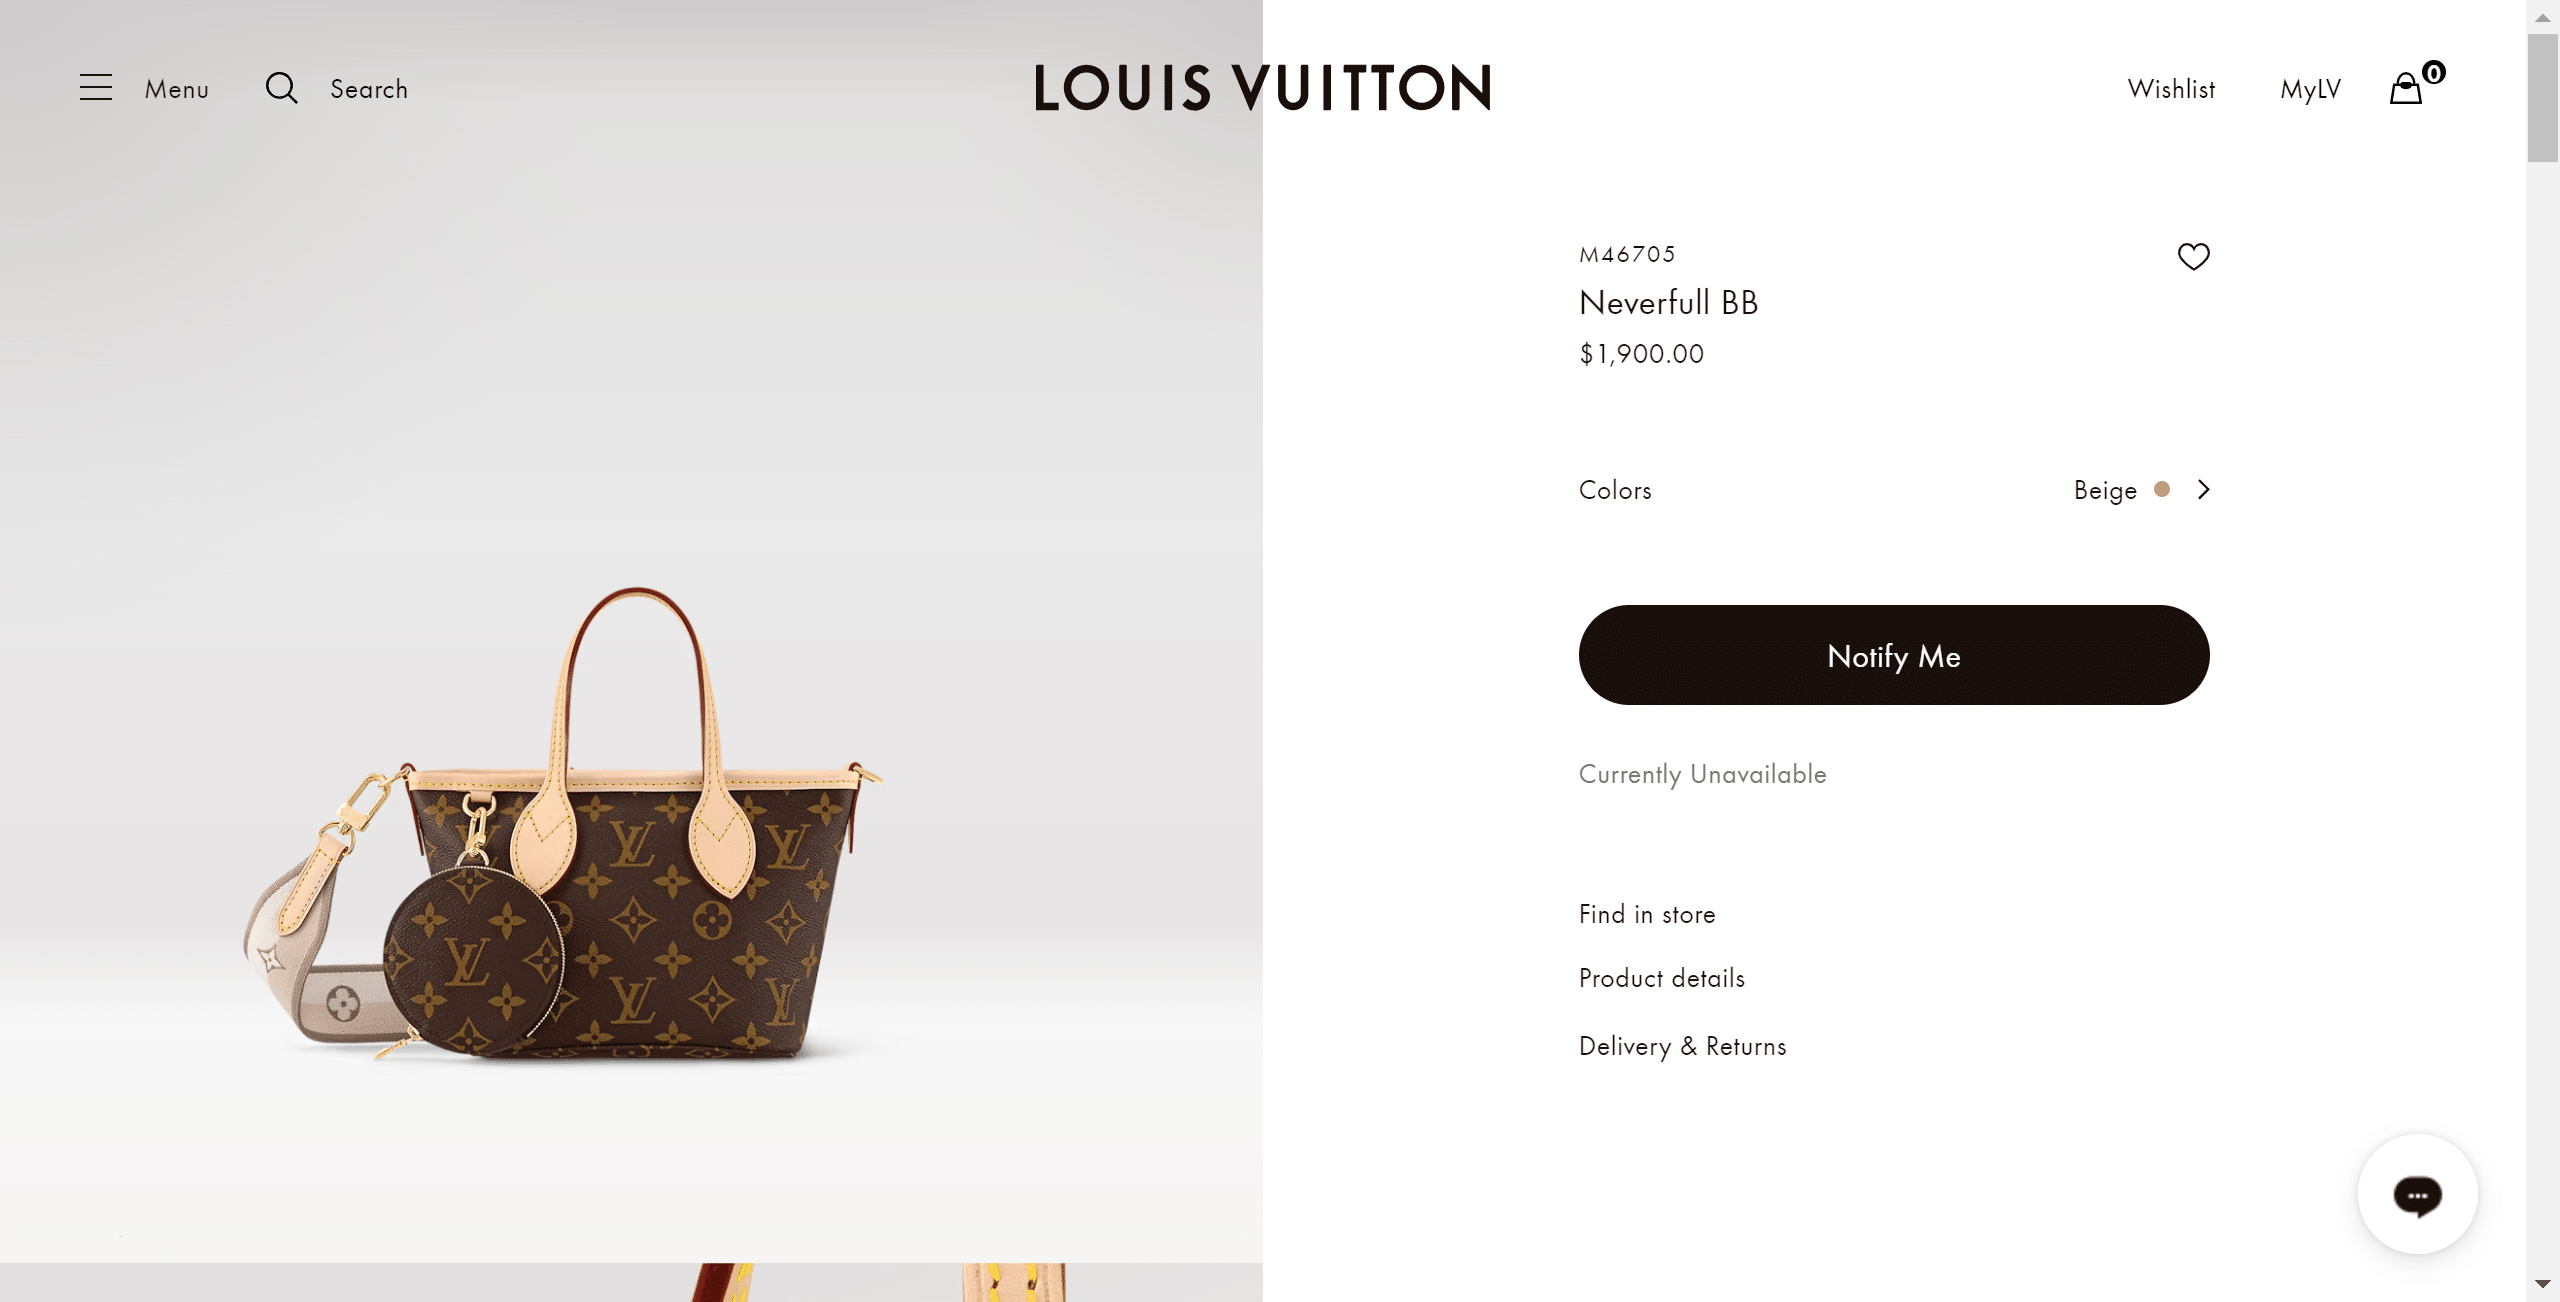 Louis Vuitton NEVERFULL Neverfull BB (M46705)